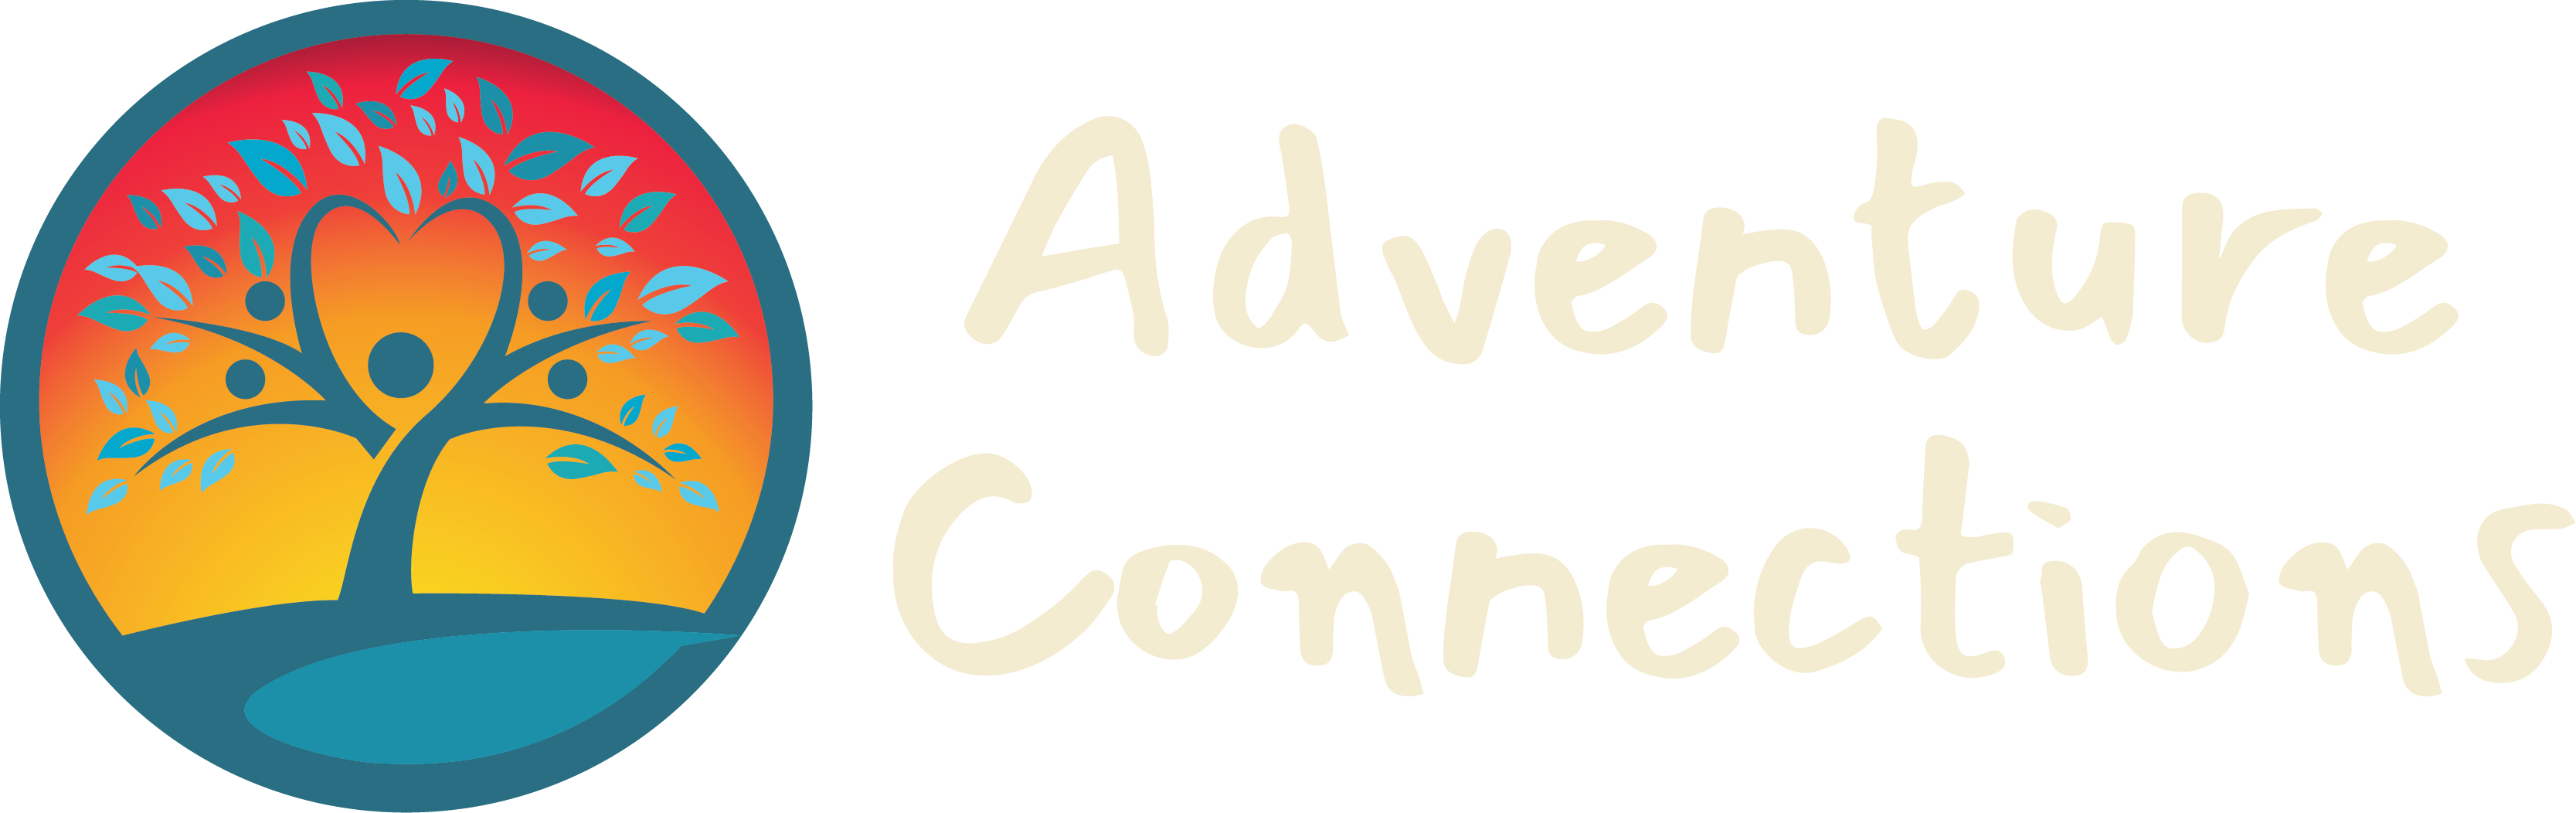 Adventure Connections_logo reverse